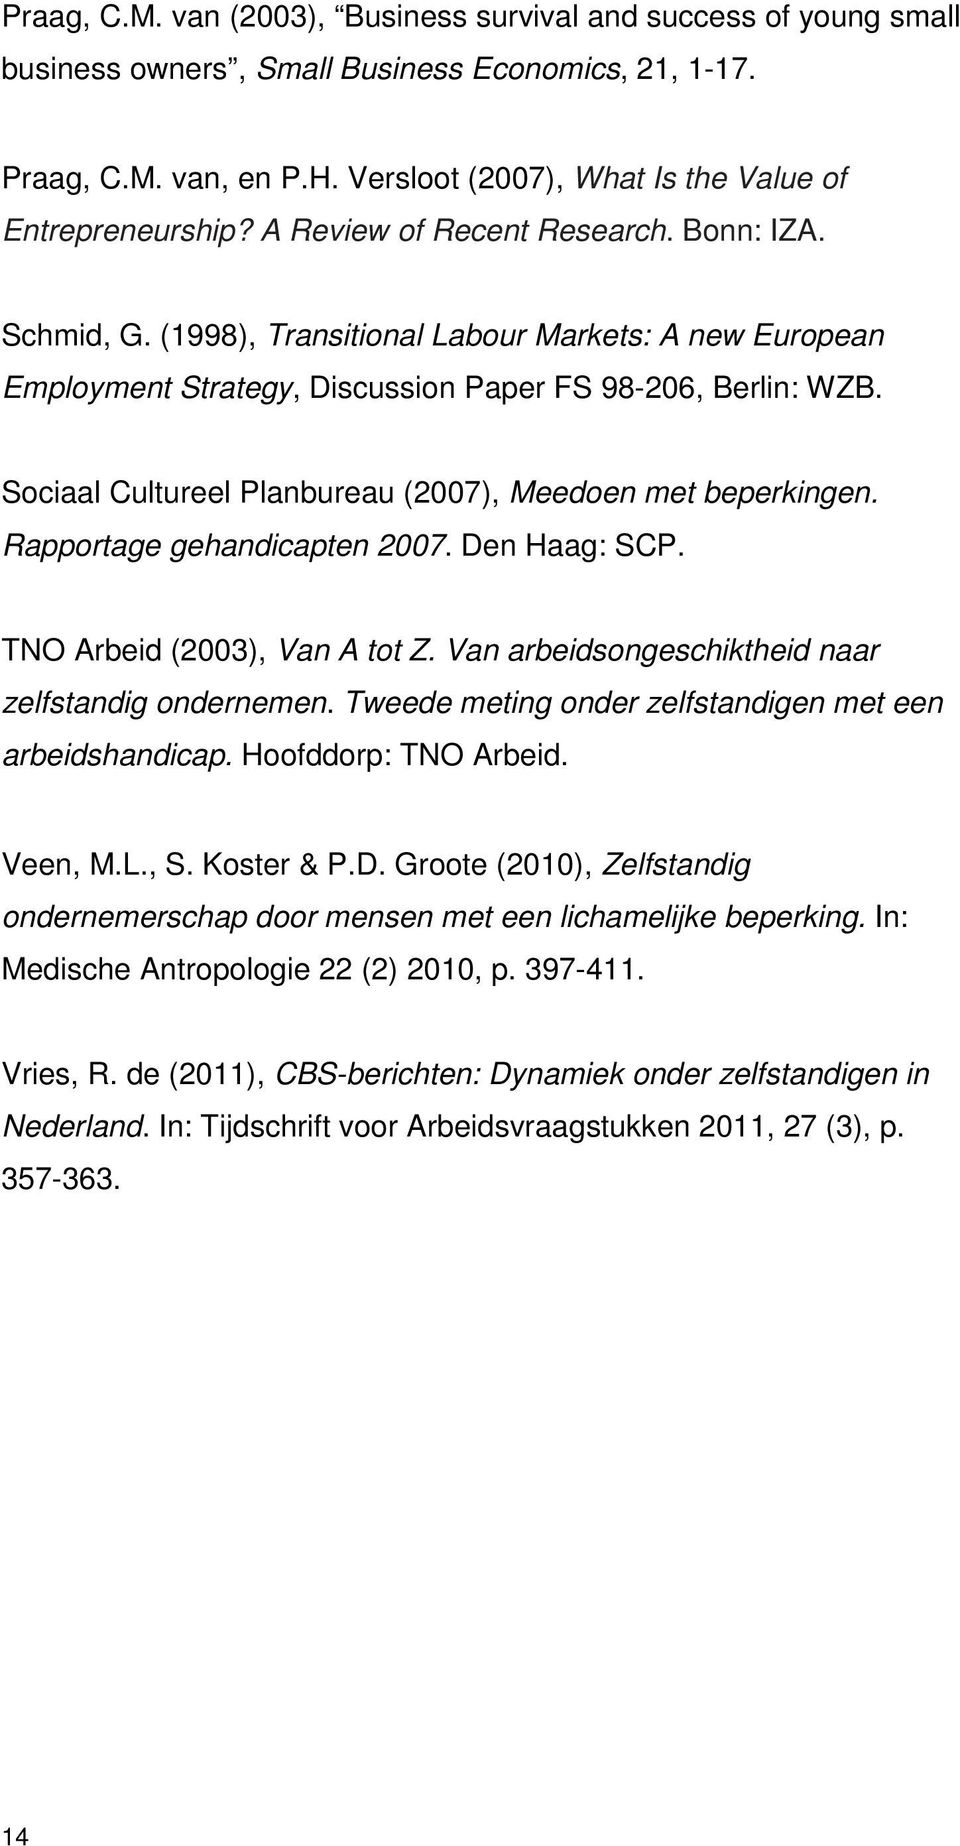 (1998), Transitional Labour Markets: A new European Employment Strategy, Discussion Paper FS 98-206, Berlin: WZB. Sociaal Cultureel Planbureau (2007), Meedoen met beperkingen.